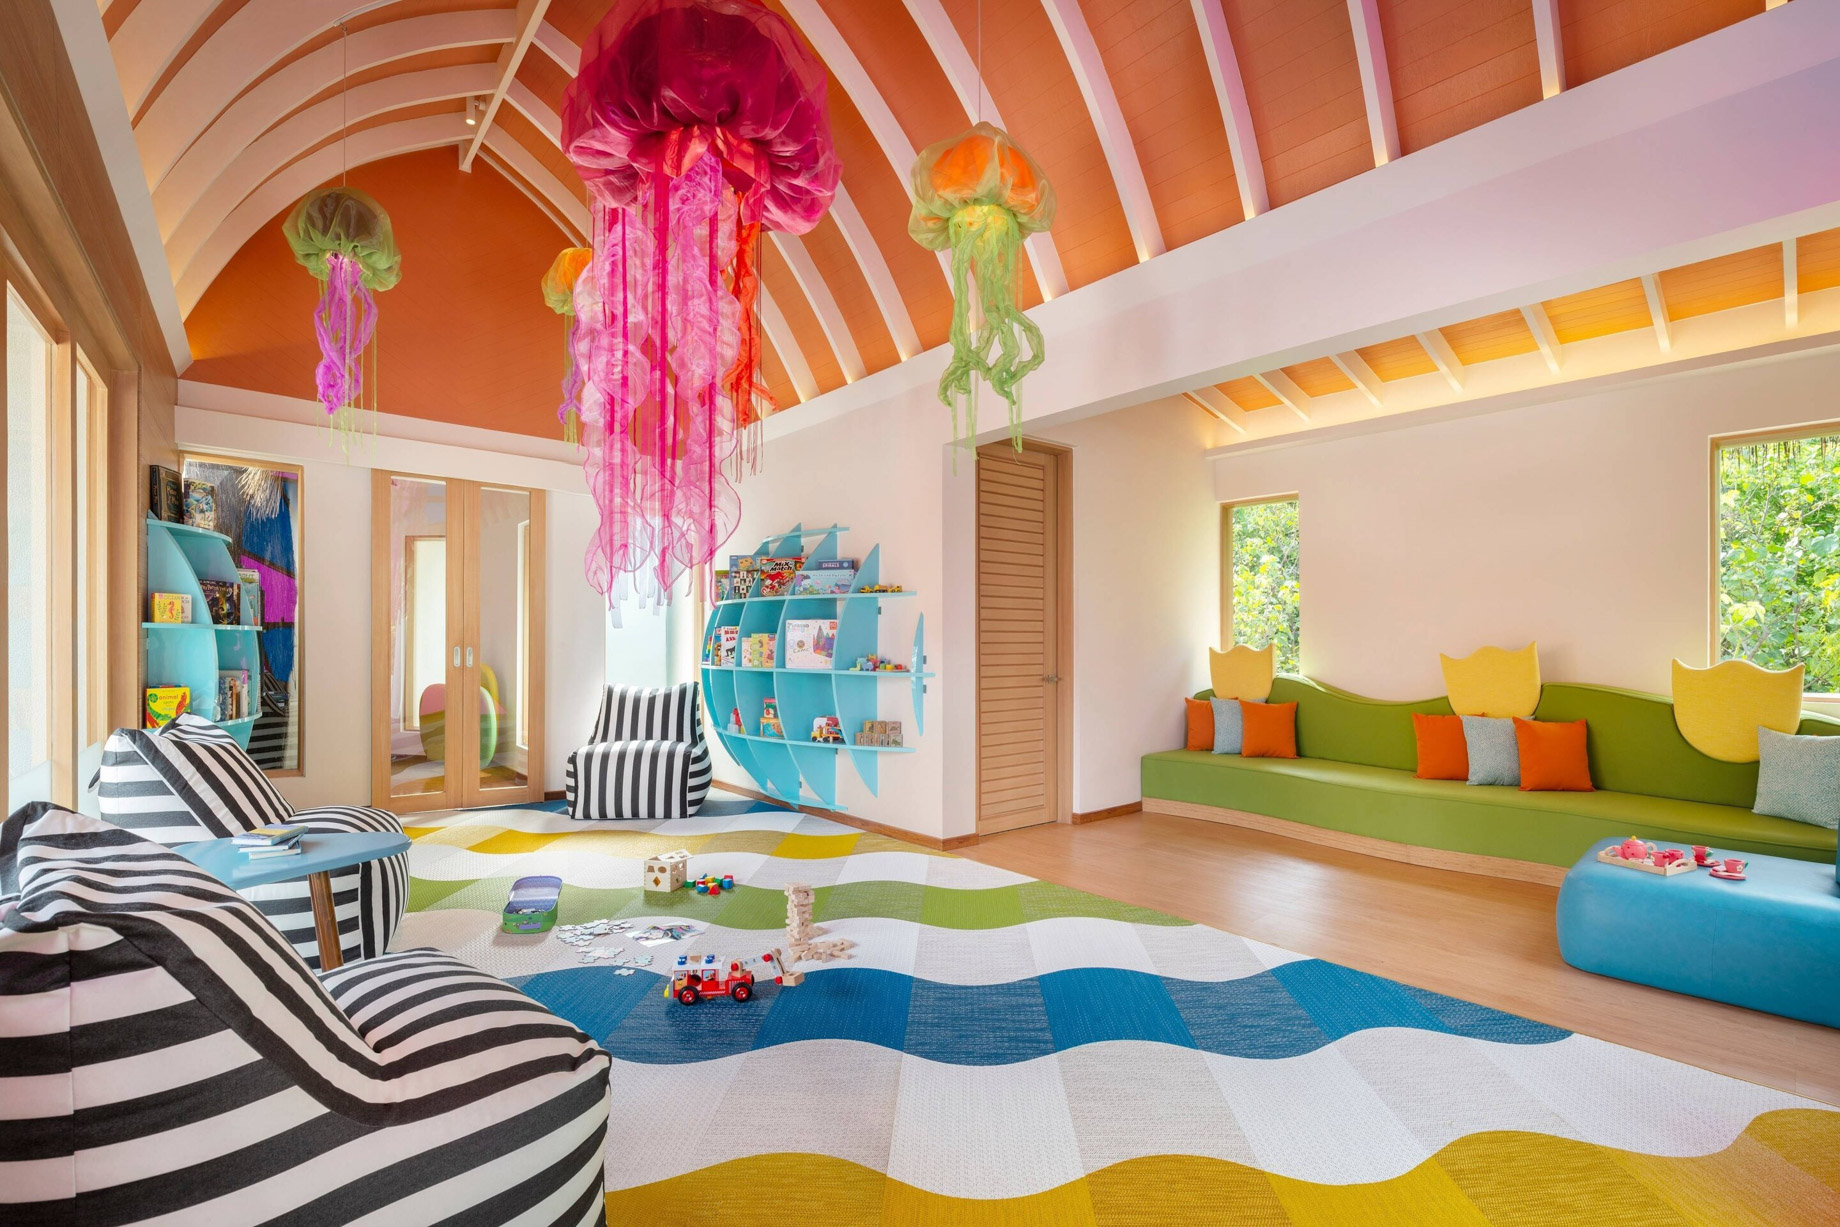 JW Marriott Maldives Resort & Spa – Shaviyani Atoll, Maldives – Little Griffins Kids Club Interior Decor